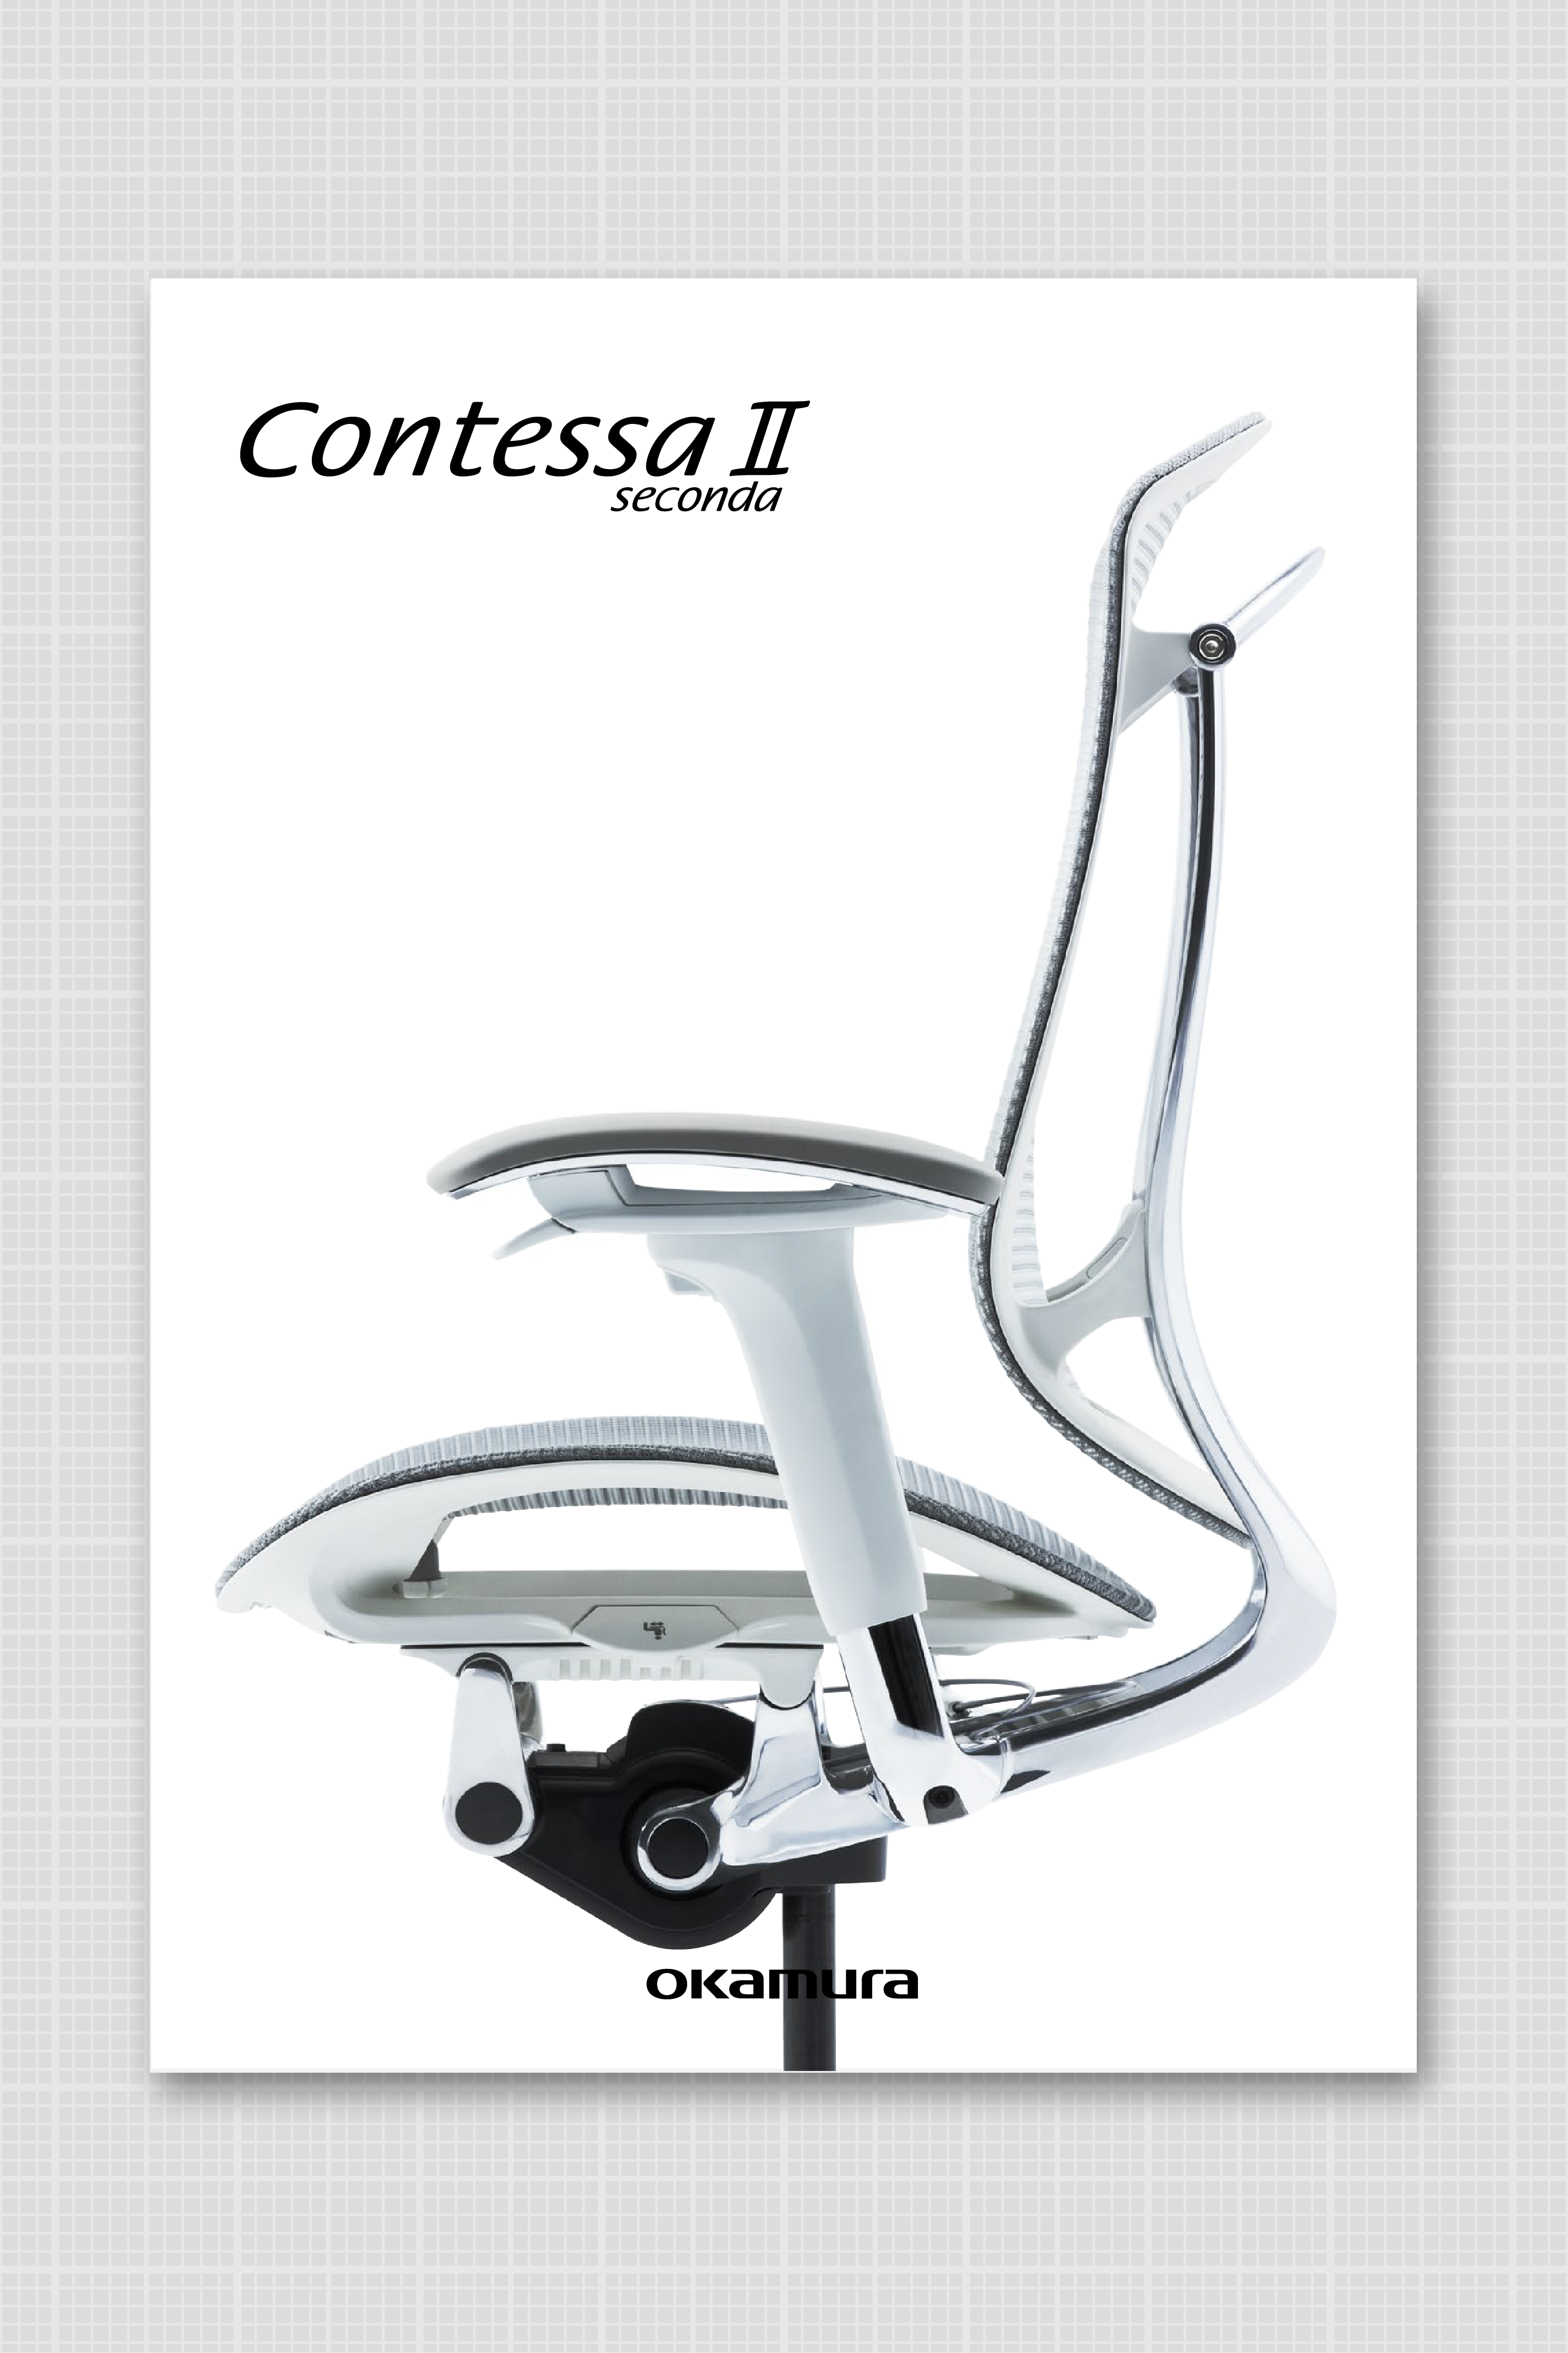 Contessa II Brochure